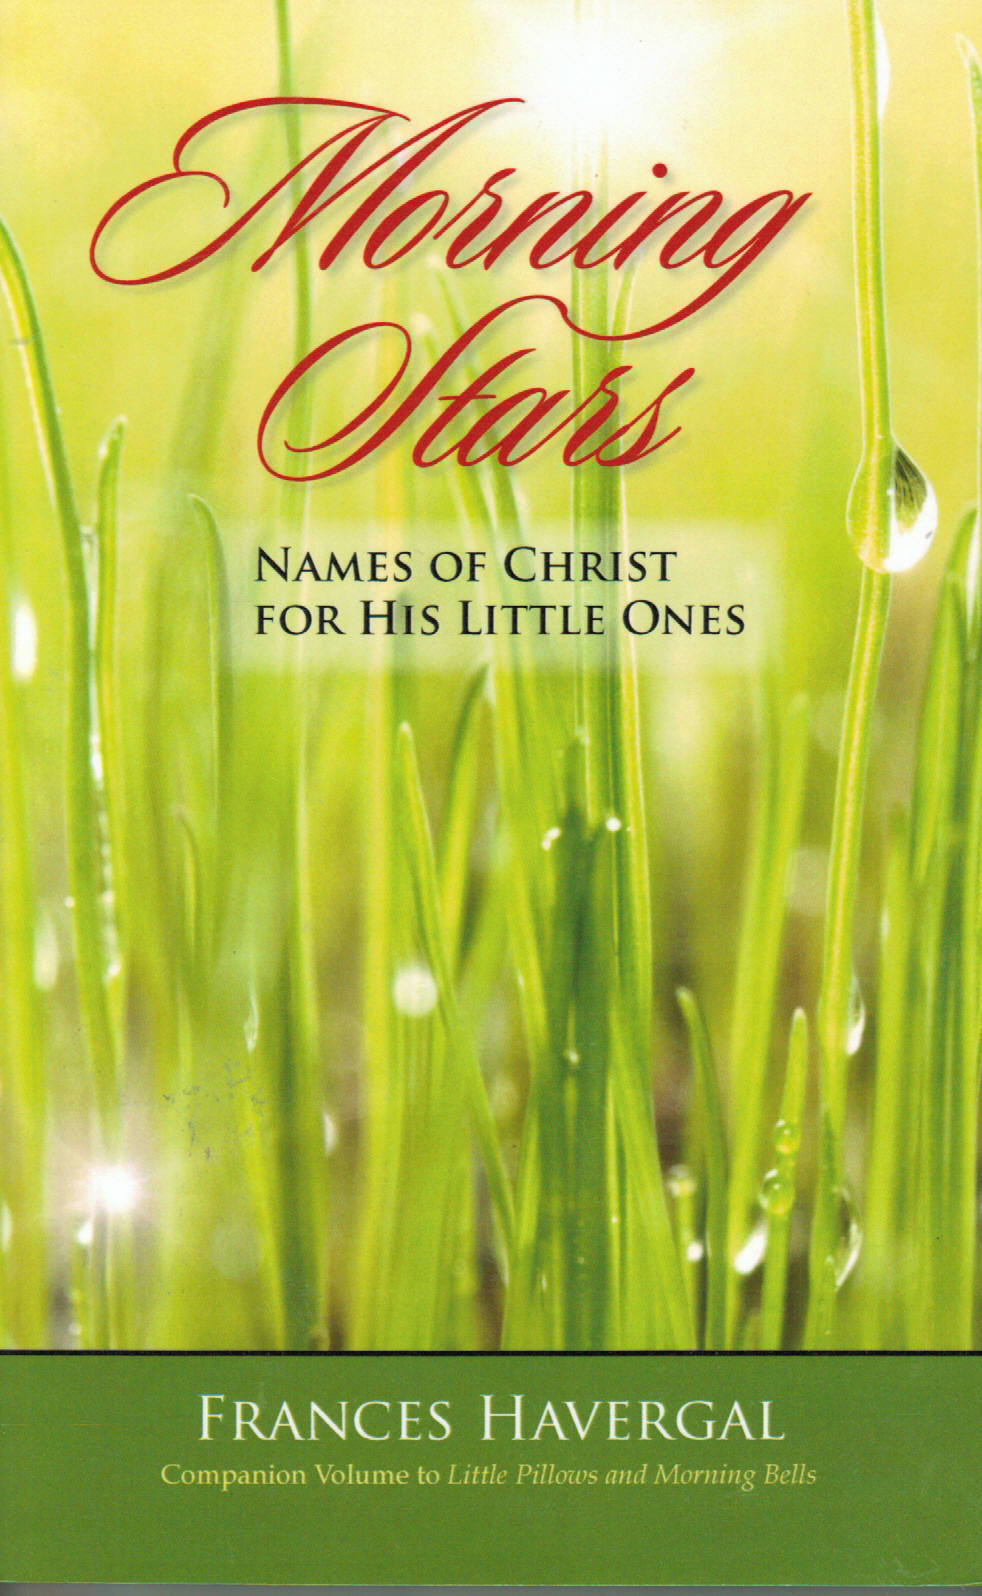 Morning Stars: Names of Christ for His Little Ones